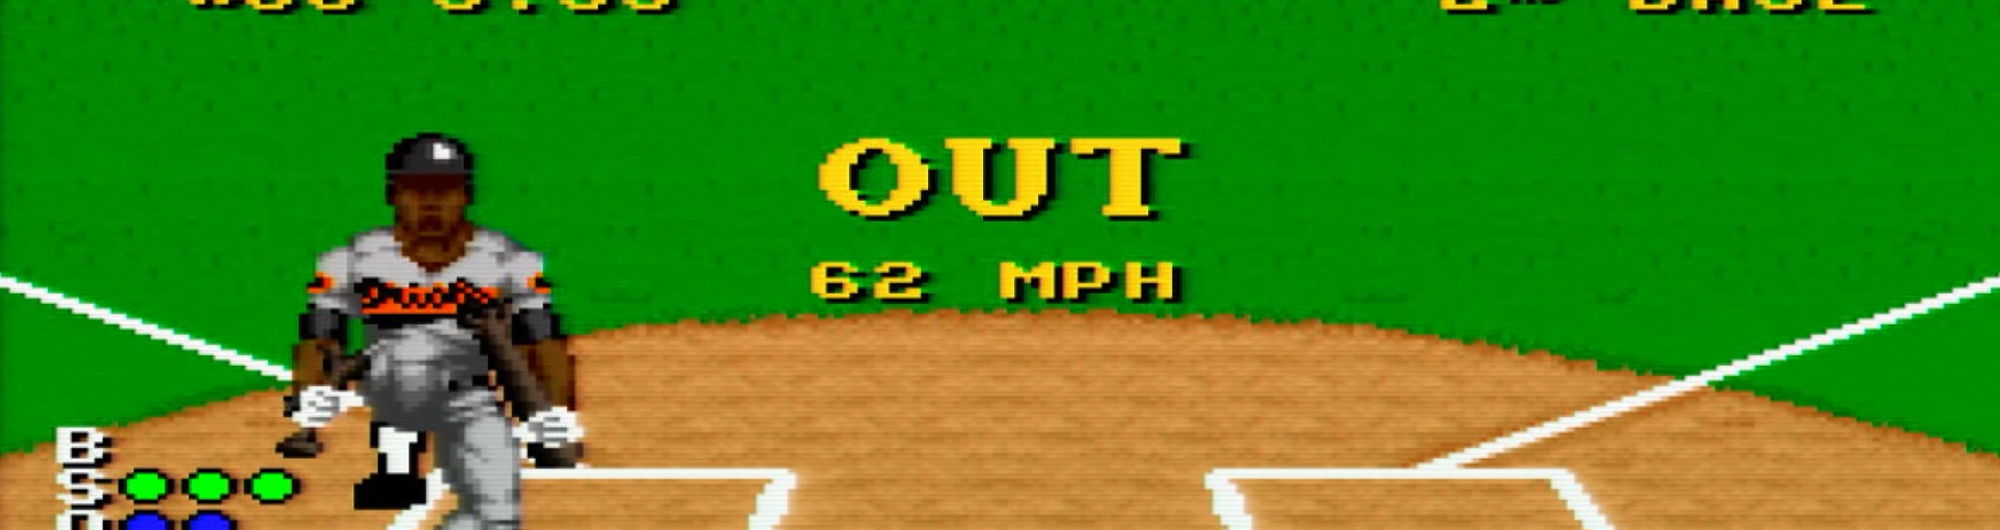 Ken Griffey Jr Presents Major League Baseball SNES 3